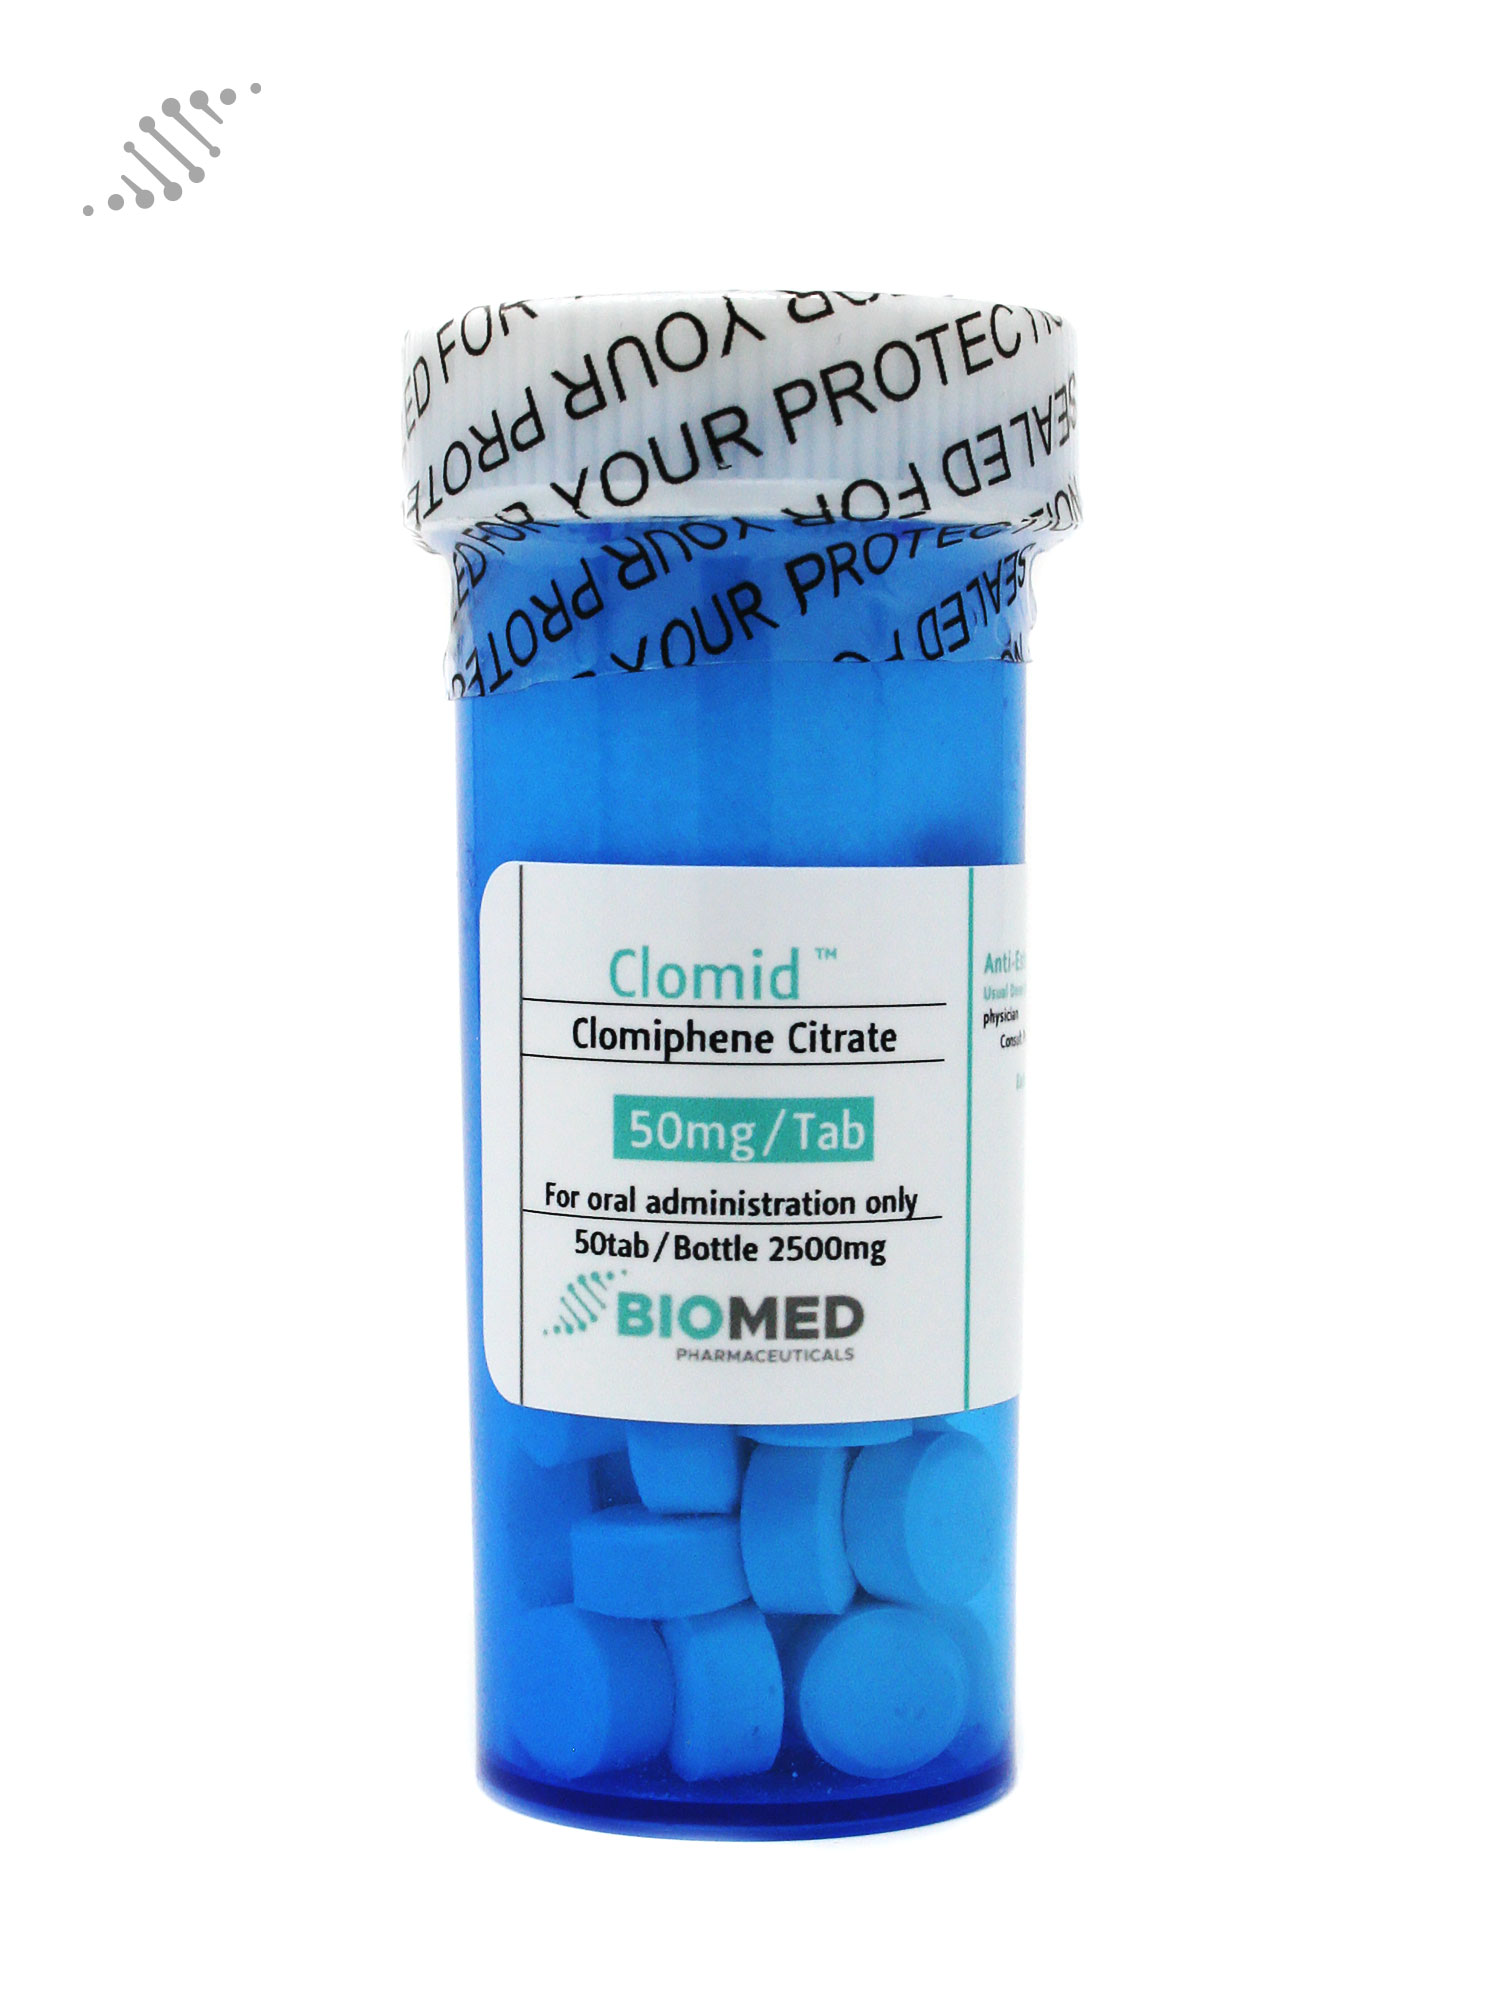 Clomid Clomiphene Citrate 50mg/tab